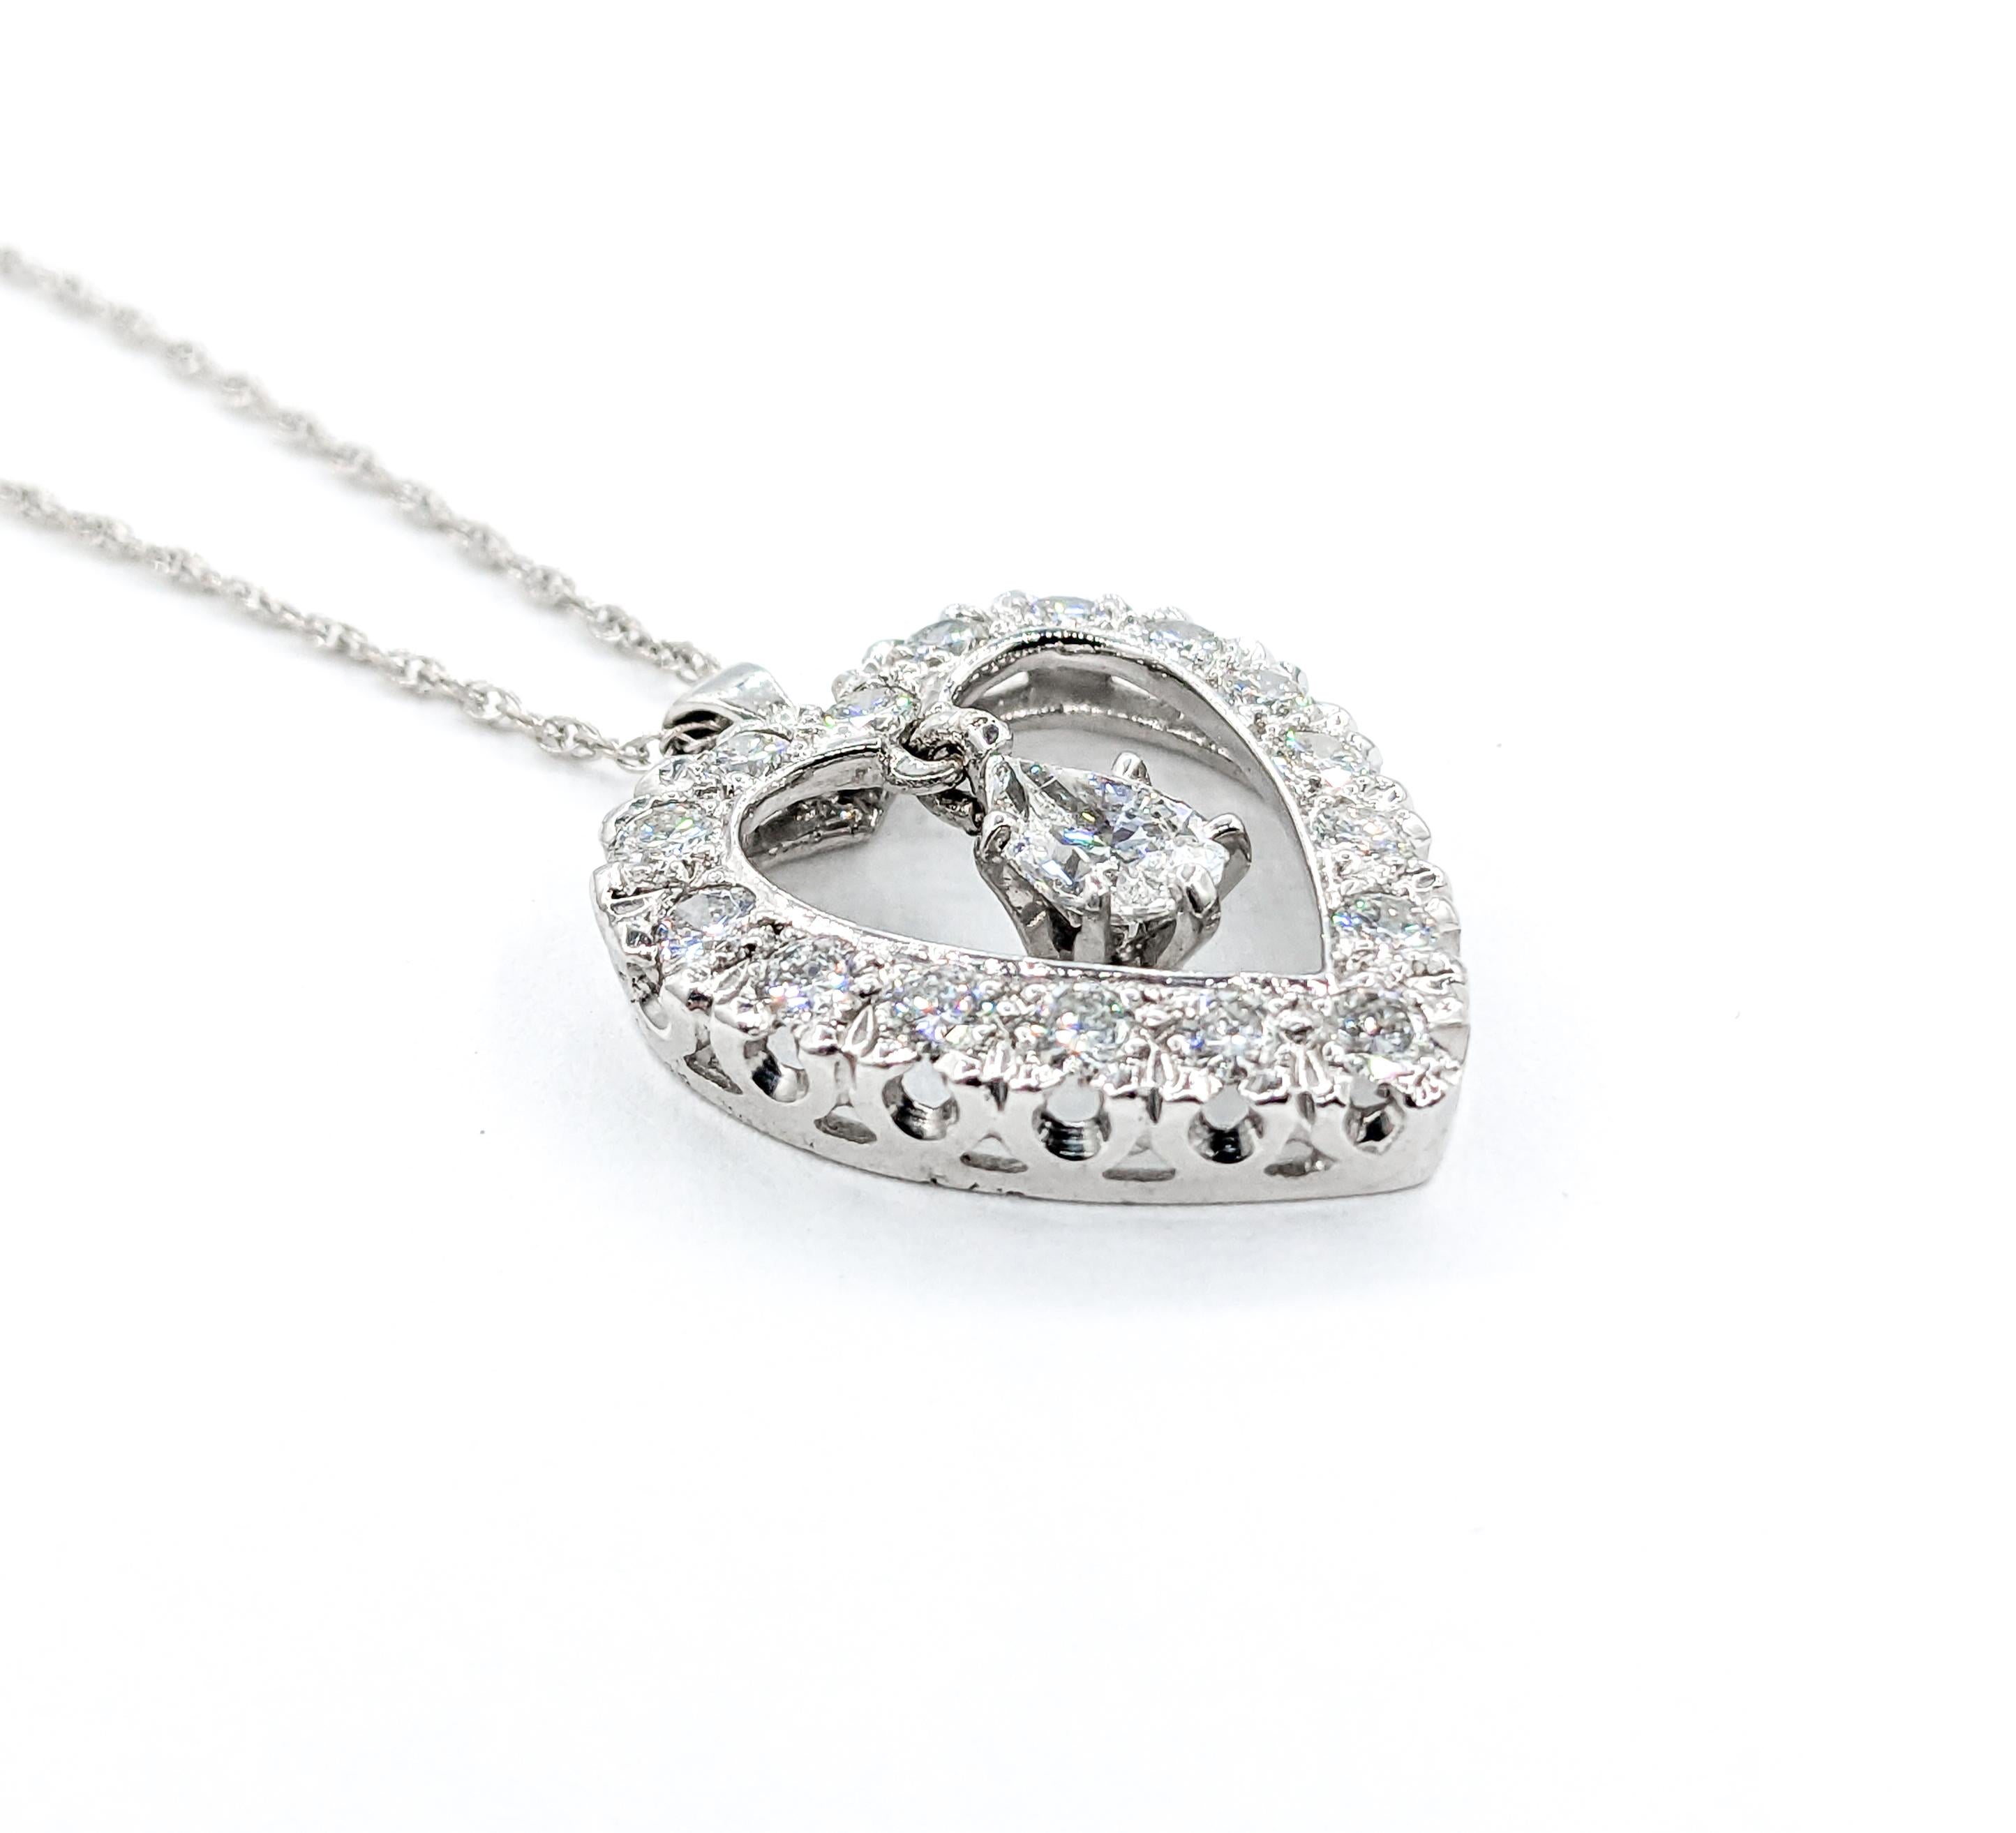  Feminine 1.30ctw Diamond Heart Pendant Necklace in White Gold For Sale 2